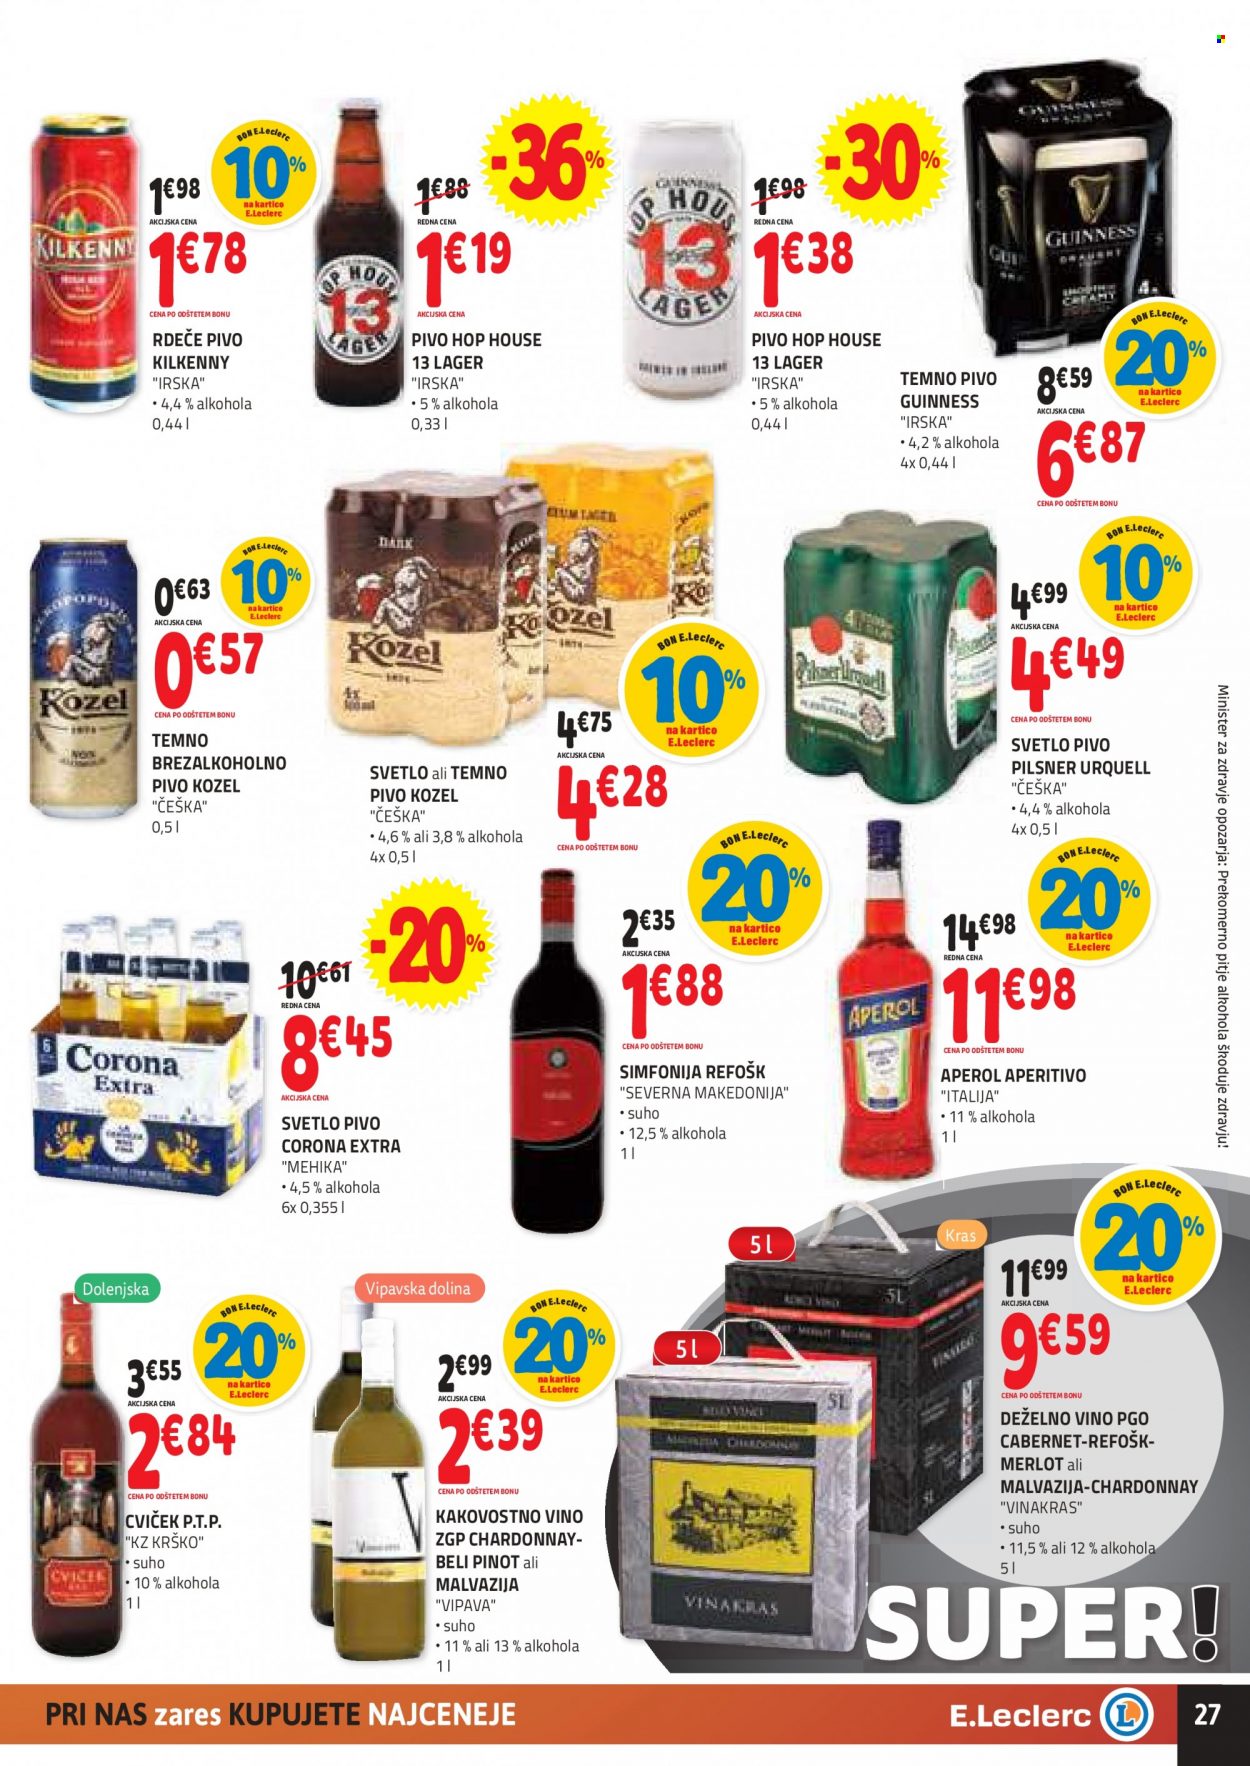 thumbnail - E.Leclerc katalog - 17.11.2021 - 27.11.2021 - Ponudba izdelkov - brezalkoholno pivo, Kozel, Pilsner Urquell, rdeče pivo, svetlo pivo, temno pivo, pivo, Chardonnay, pinot, vino. Stran 27.